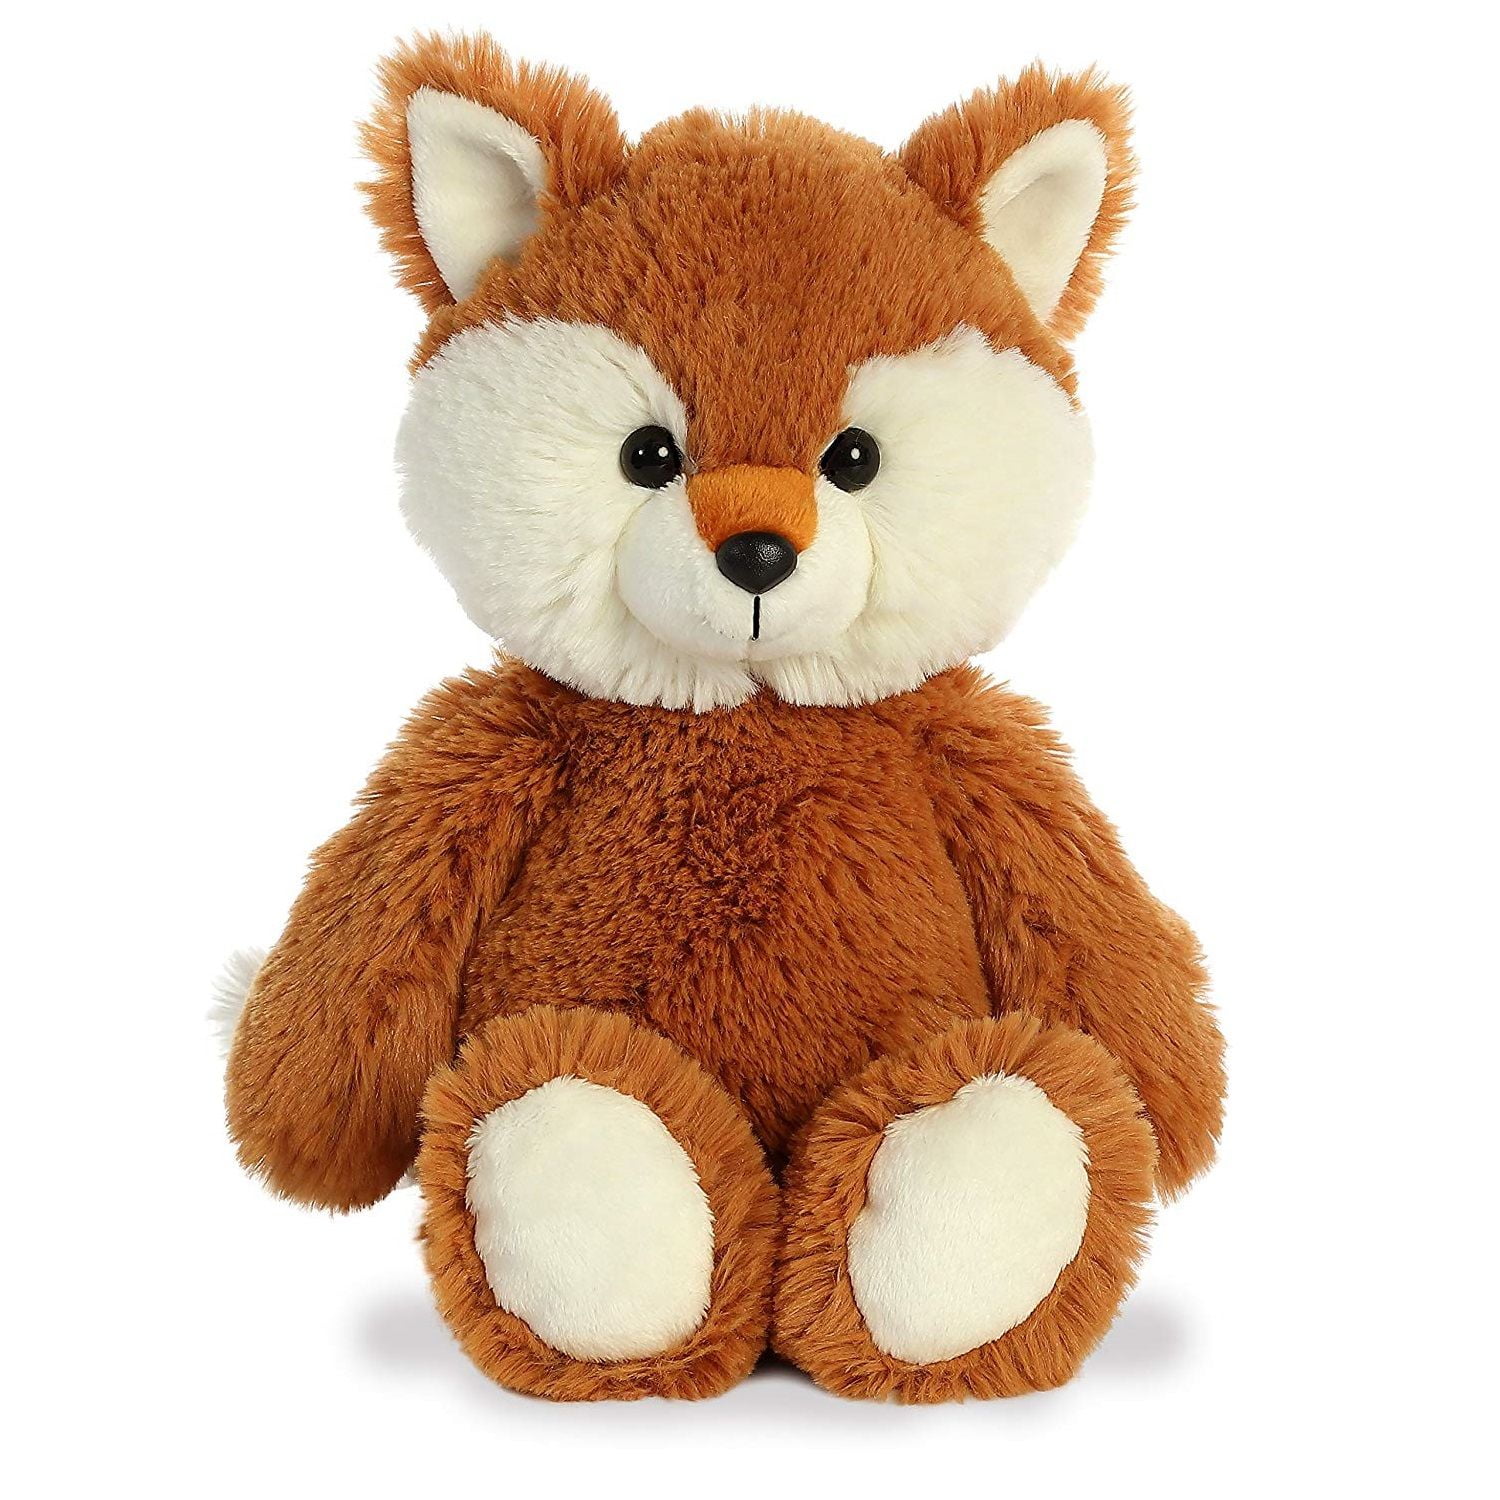 Aurora Cuddly Friends FOX 8" Plush Floppy Stuffed Animal NEW 